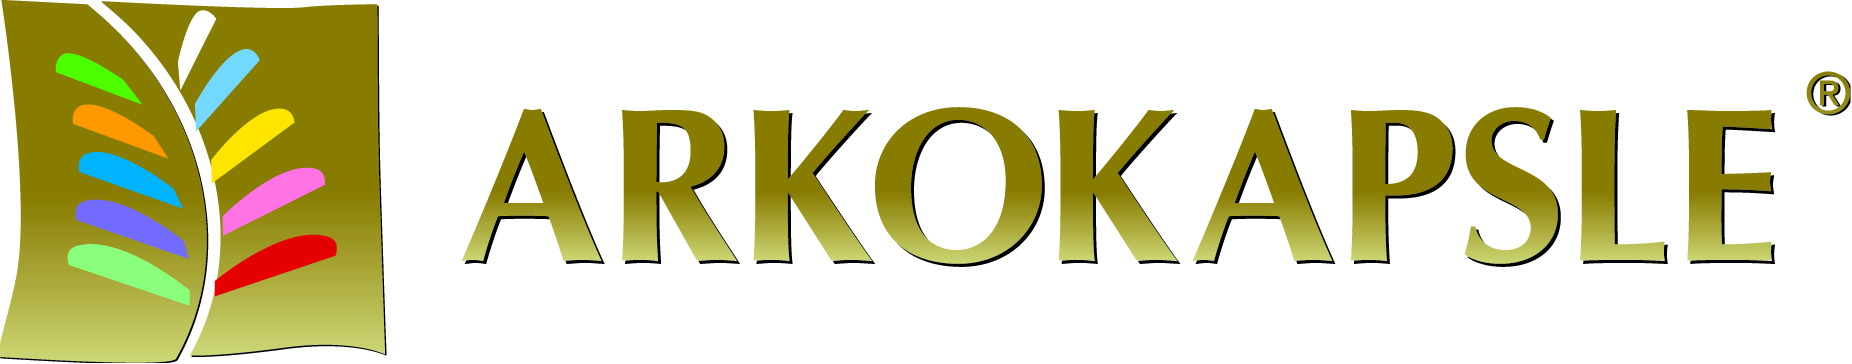 arkokapsle_logo.jpg